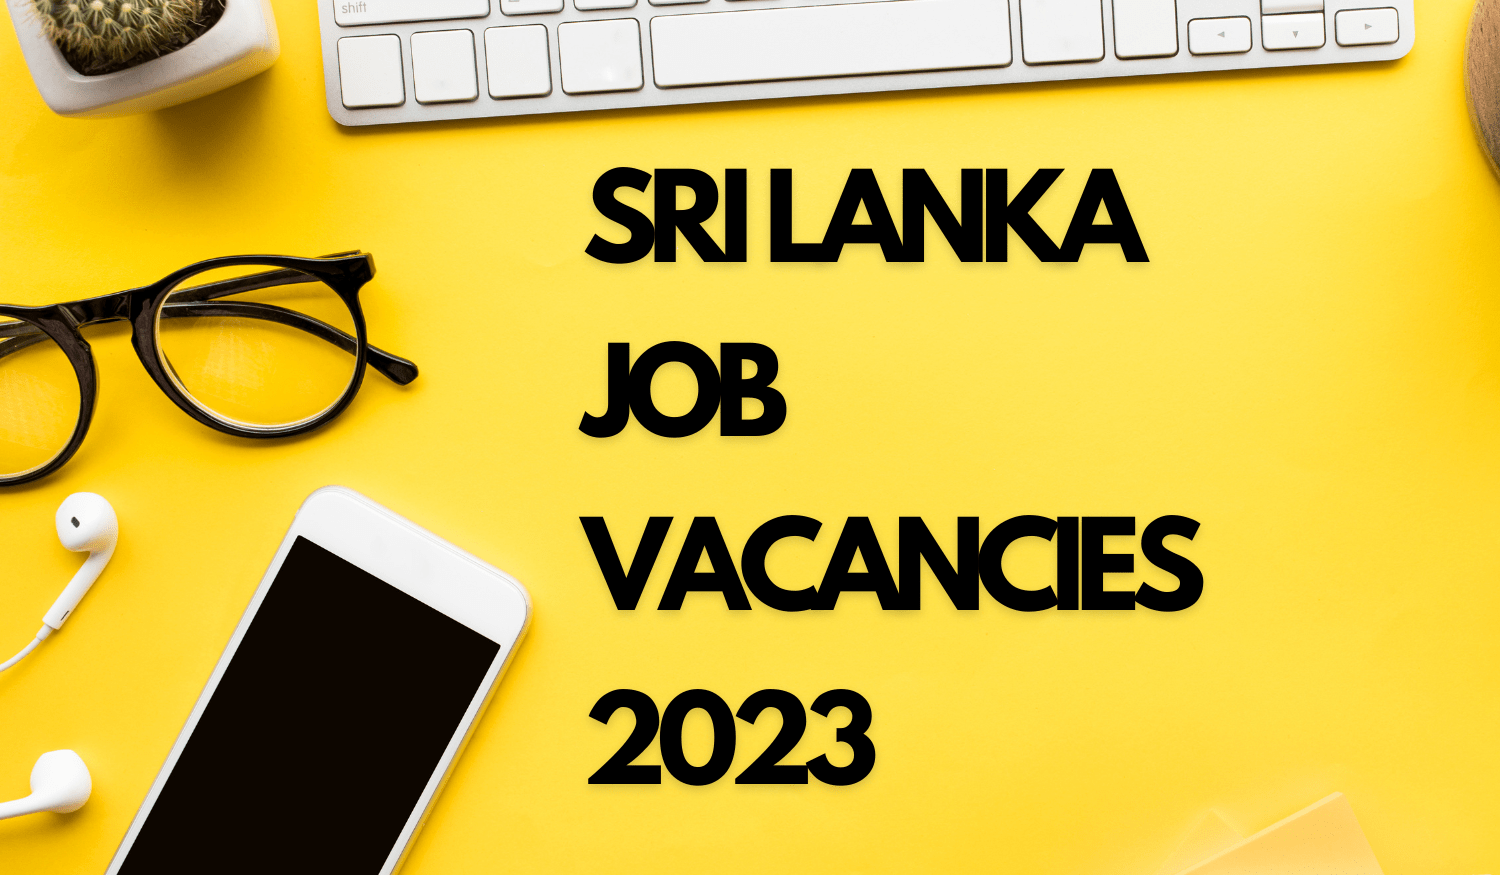 Sri Lanka Job Vacancies 2023 